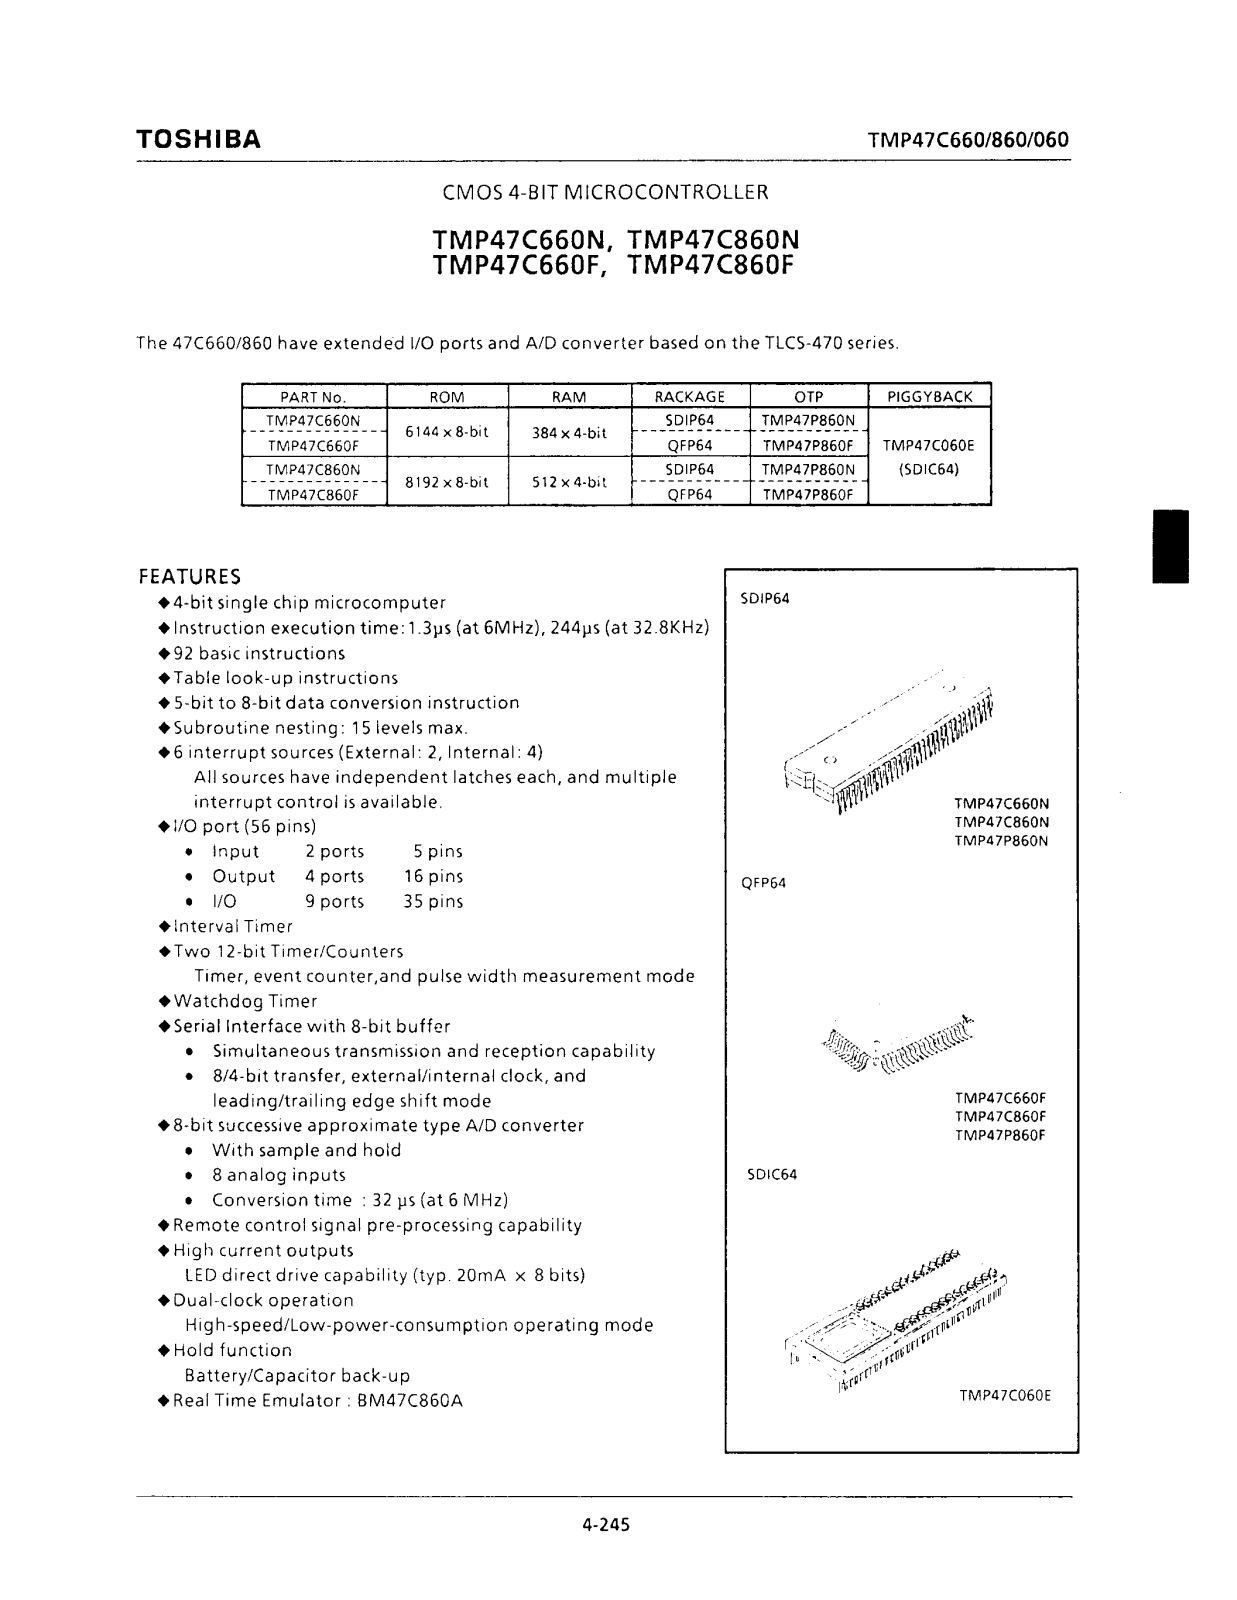 Toshiba TMP47C860F, TMP47C660F, TMP47C060E Datasheet